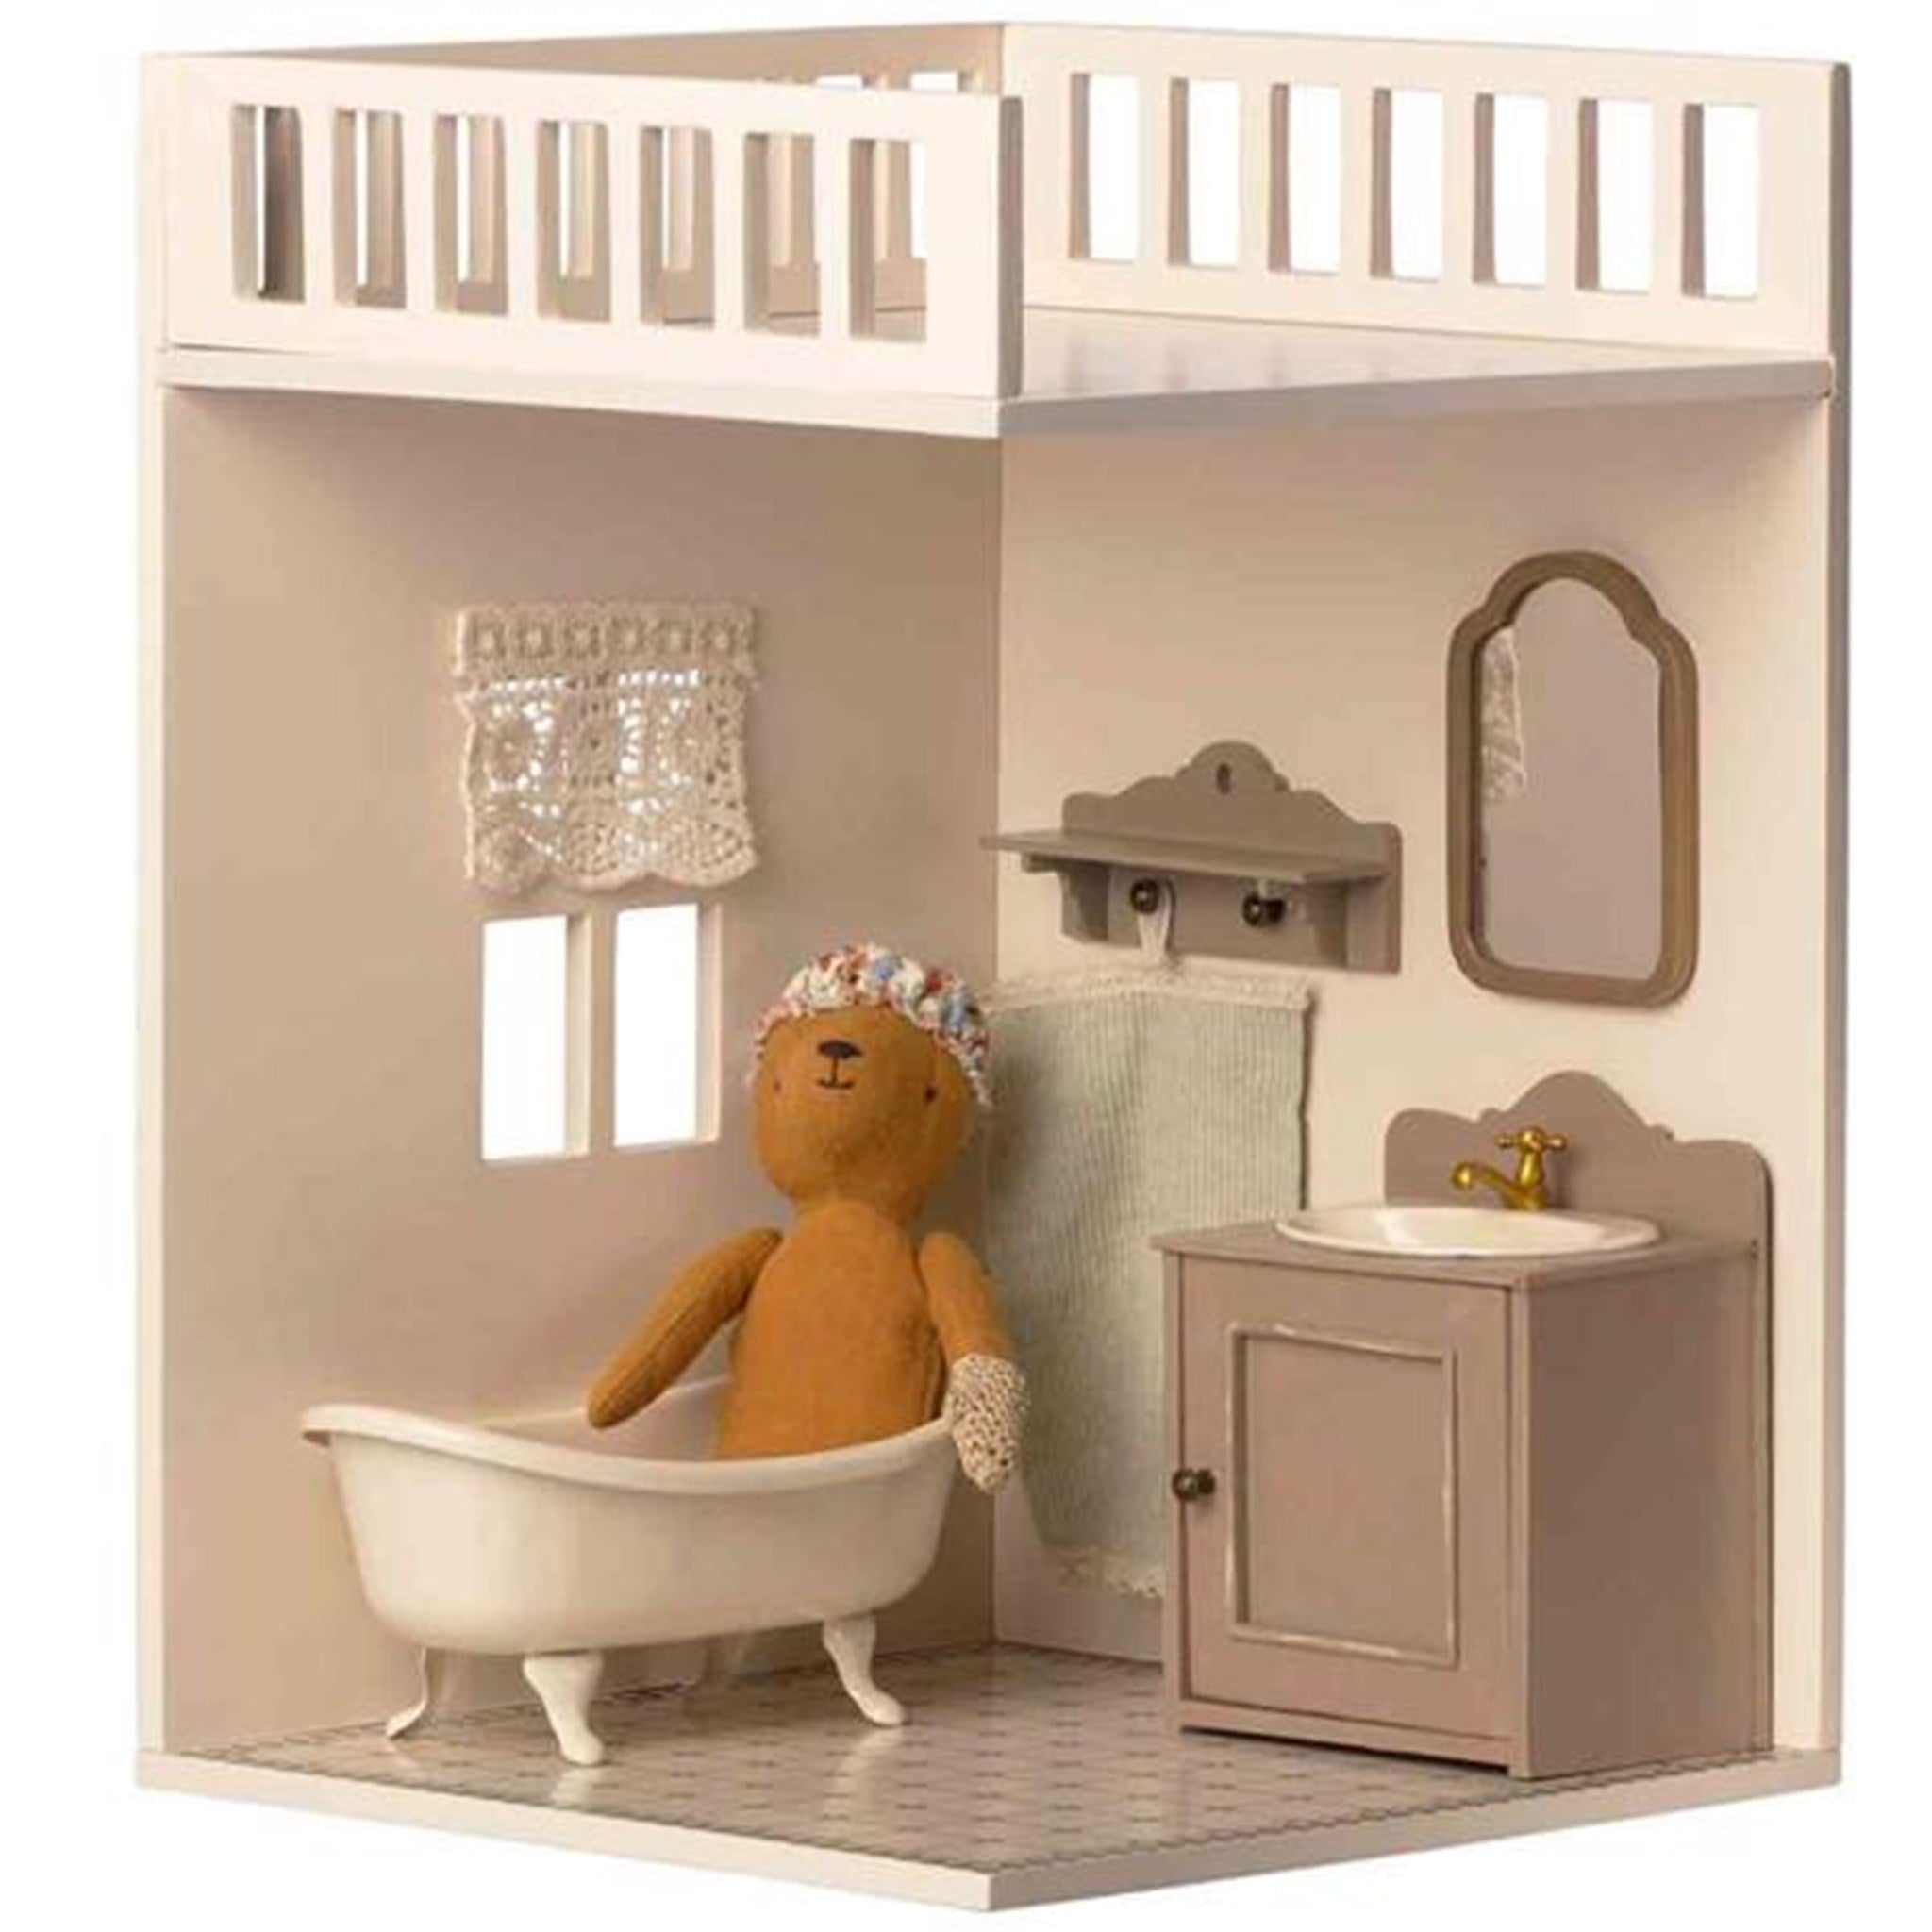 Maileg House of Miniature - Bath Room 3